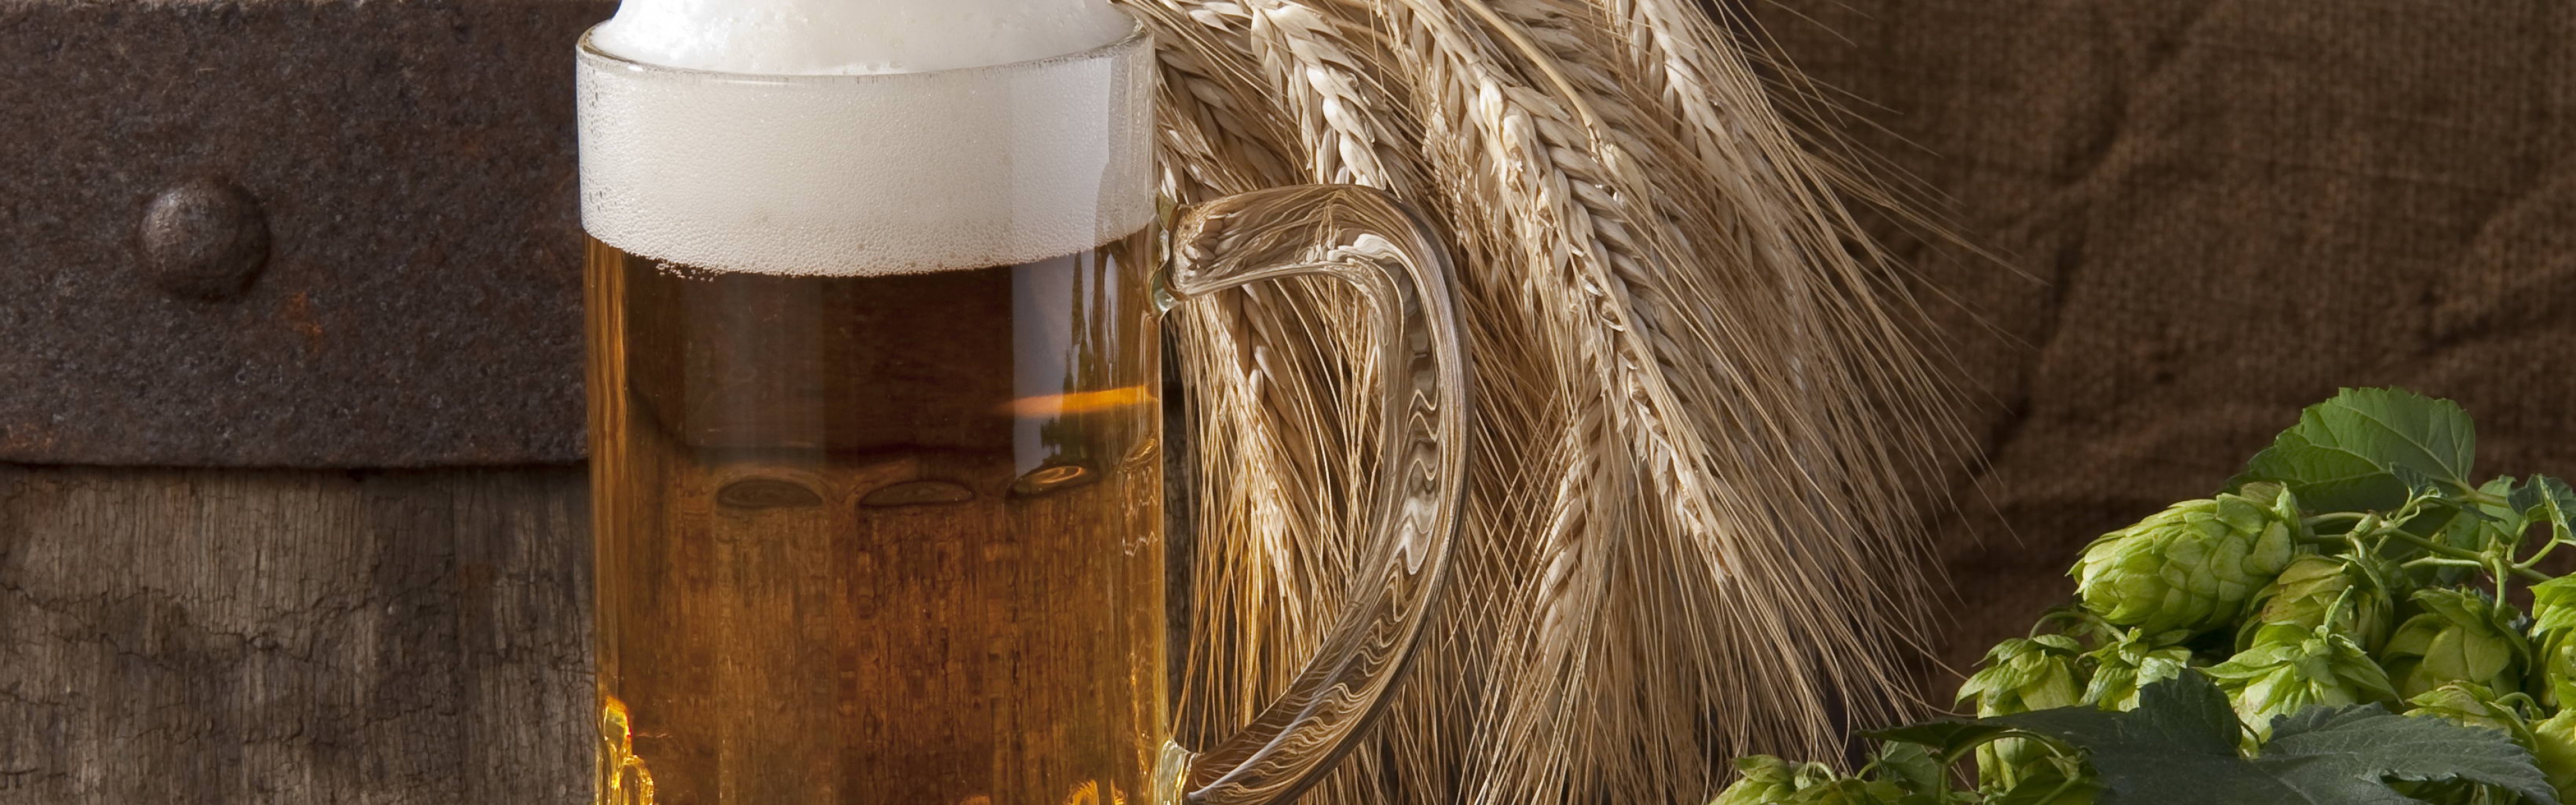 Wallpaper Beer Kuhol Foam Hops Barley Position